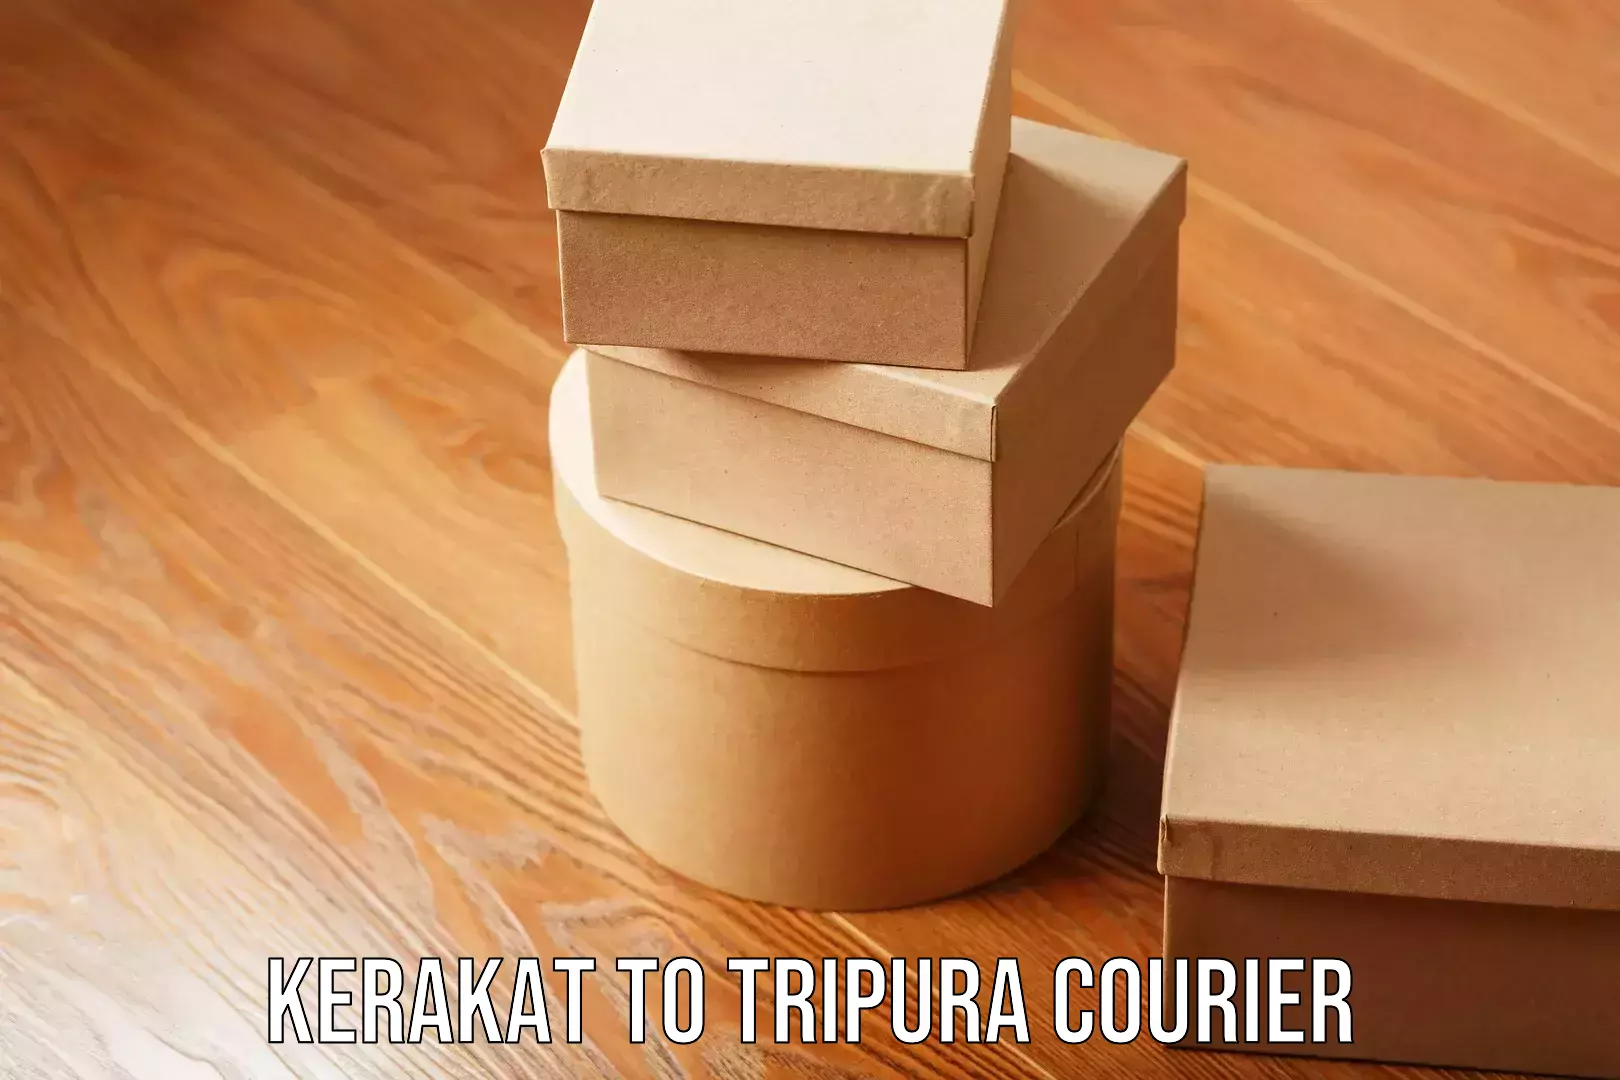 Trusted furniture movers Kerakat to Tripura